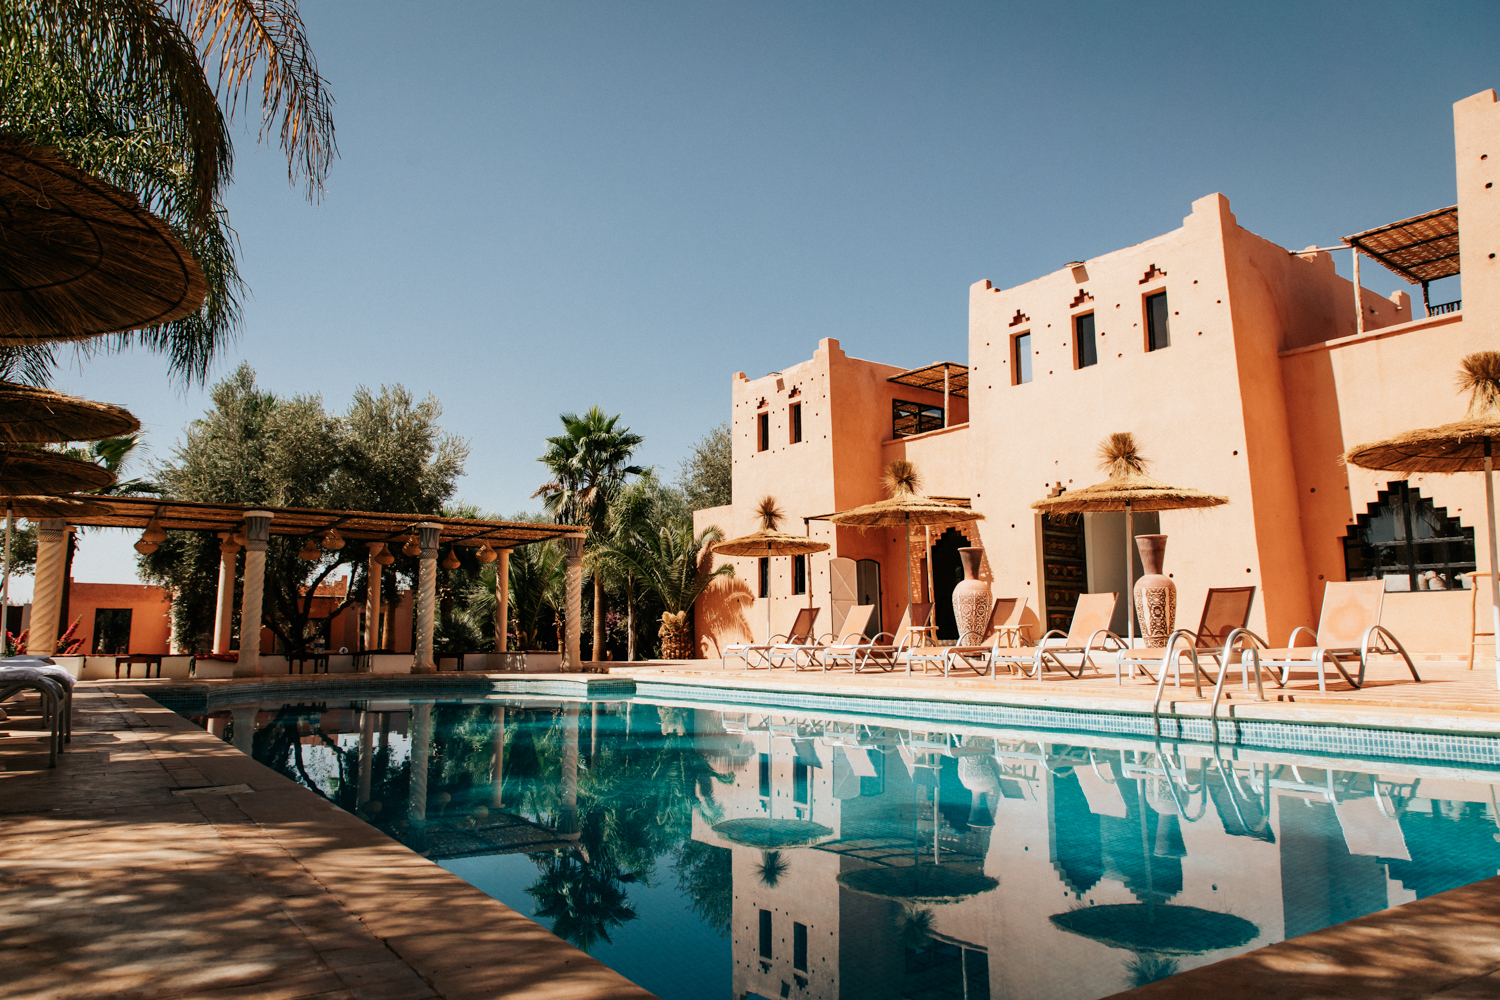 Villa & Ryad du Maroc - Image #1